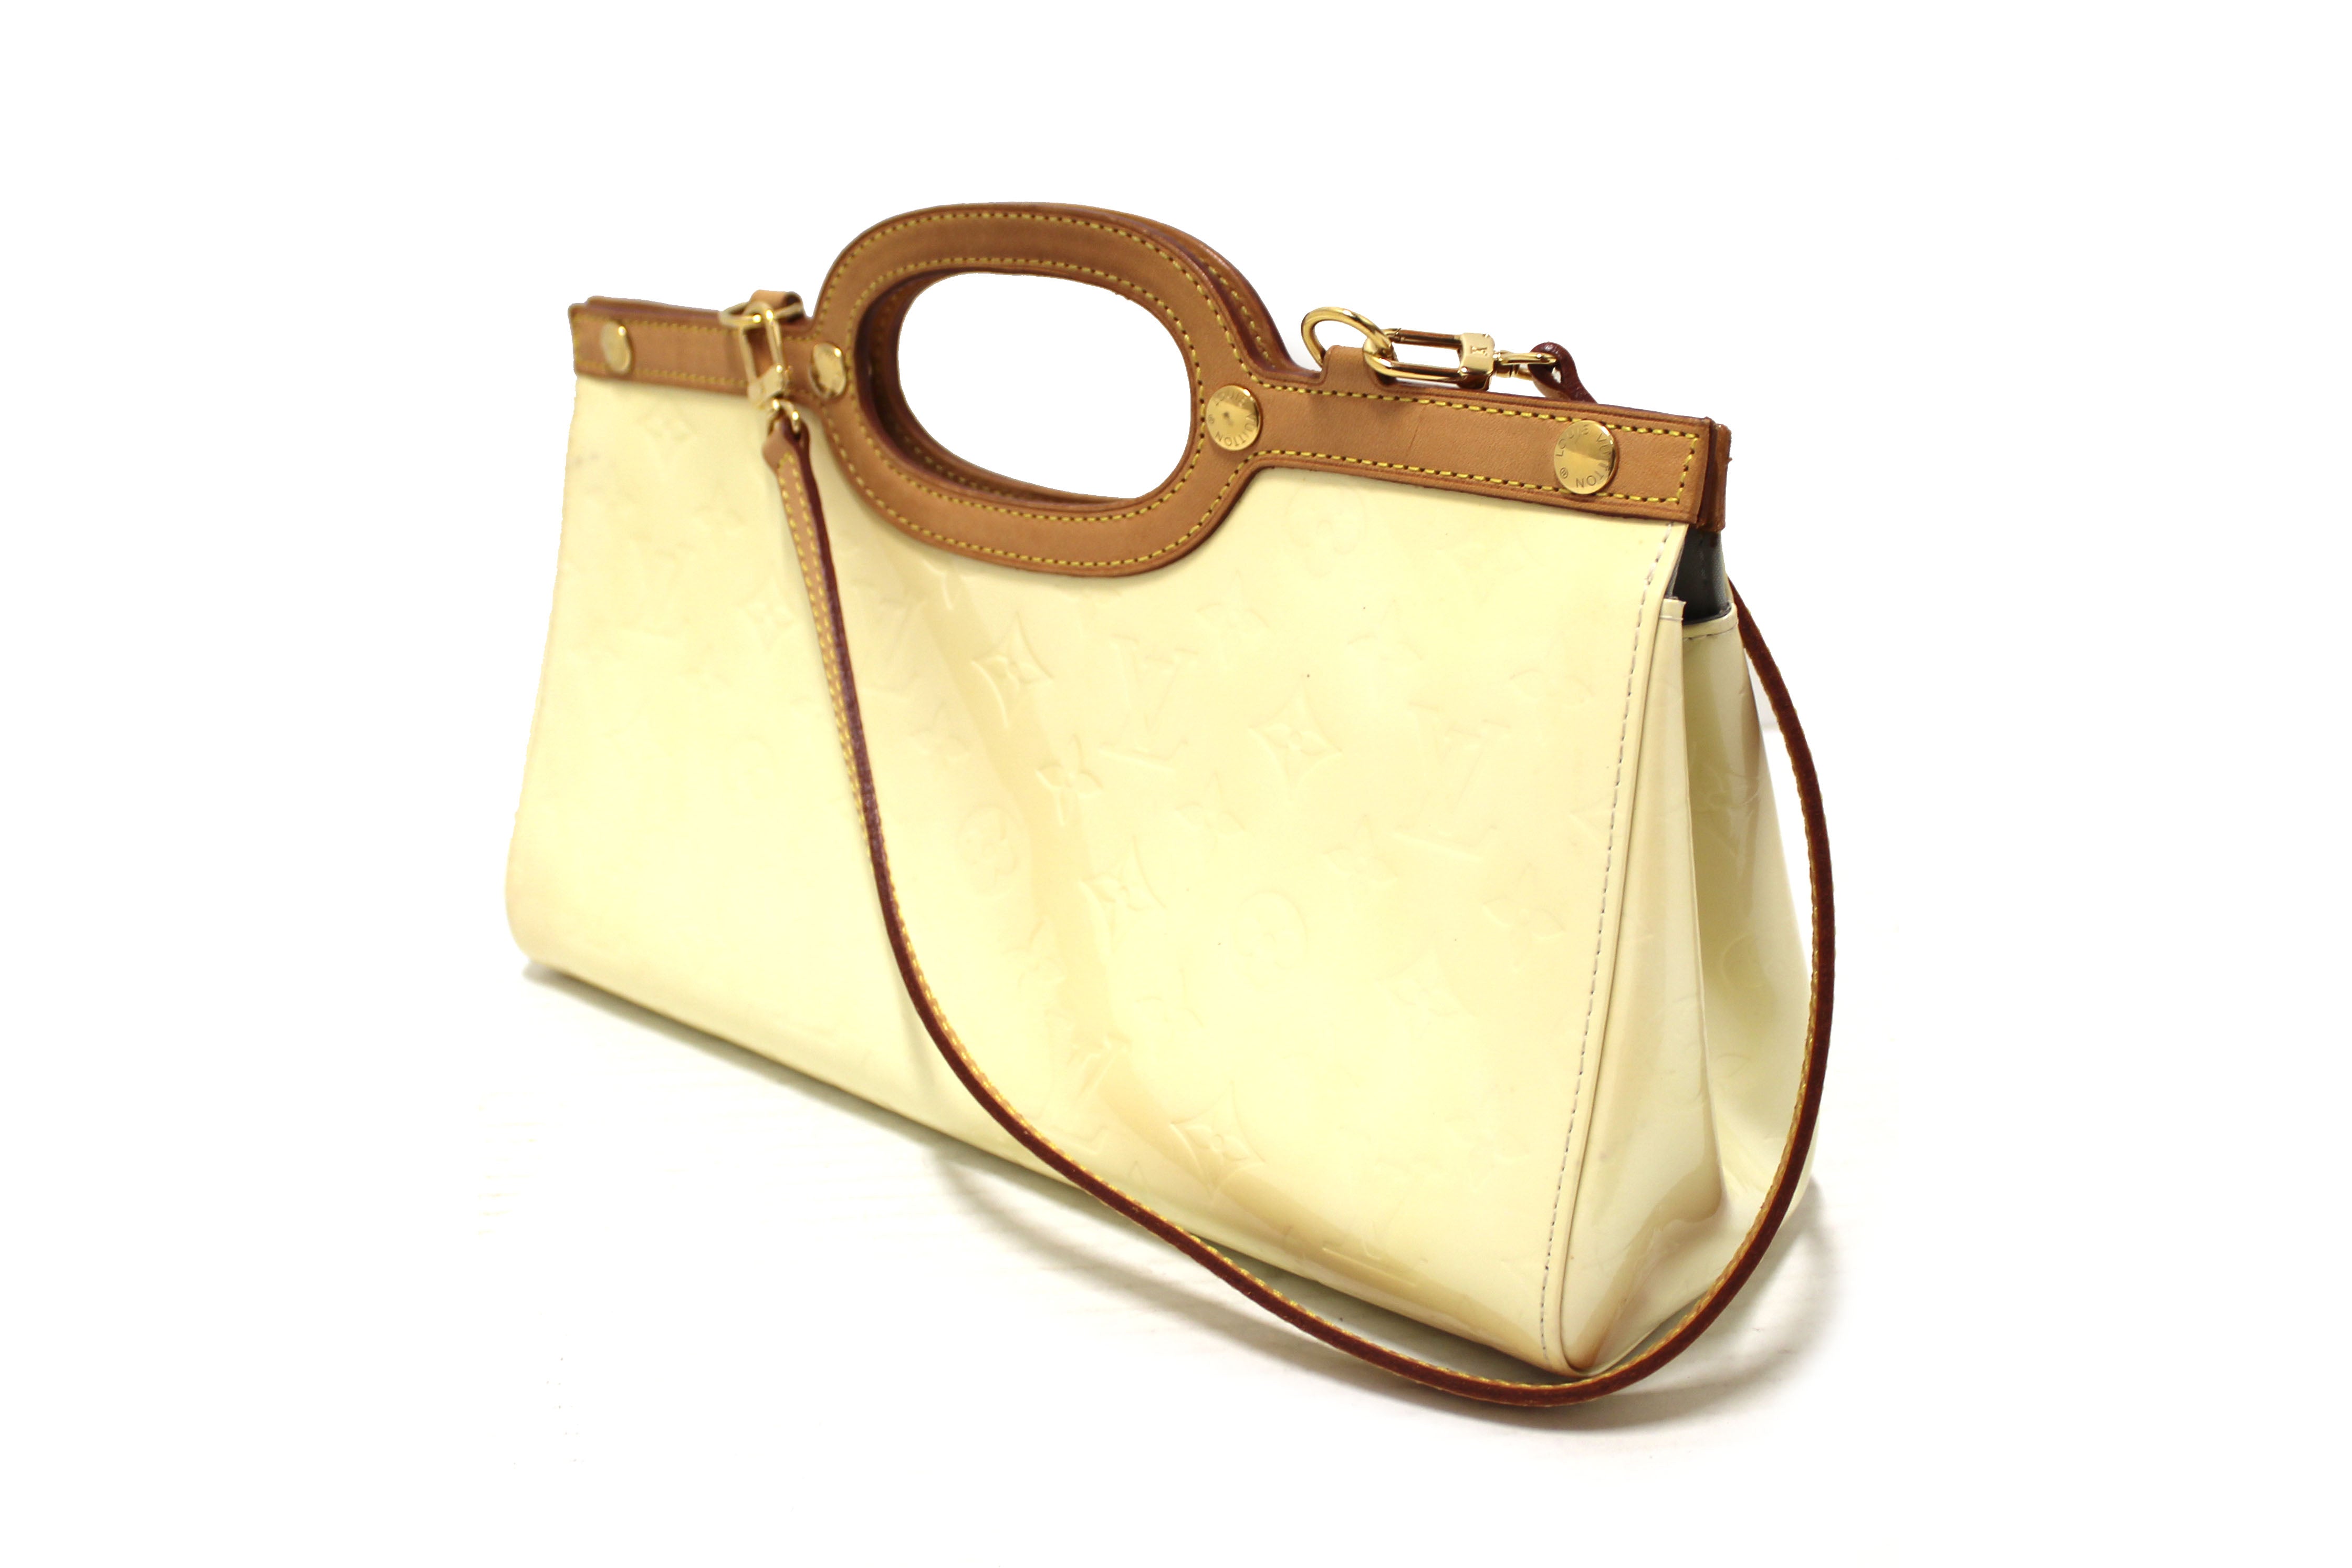 Authentic Louis Vuitton Yellow Monogram Vernis Leather Roxbury Drive Bag